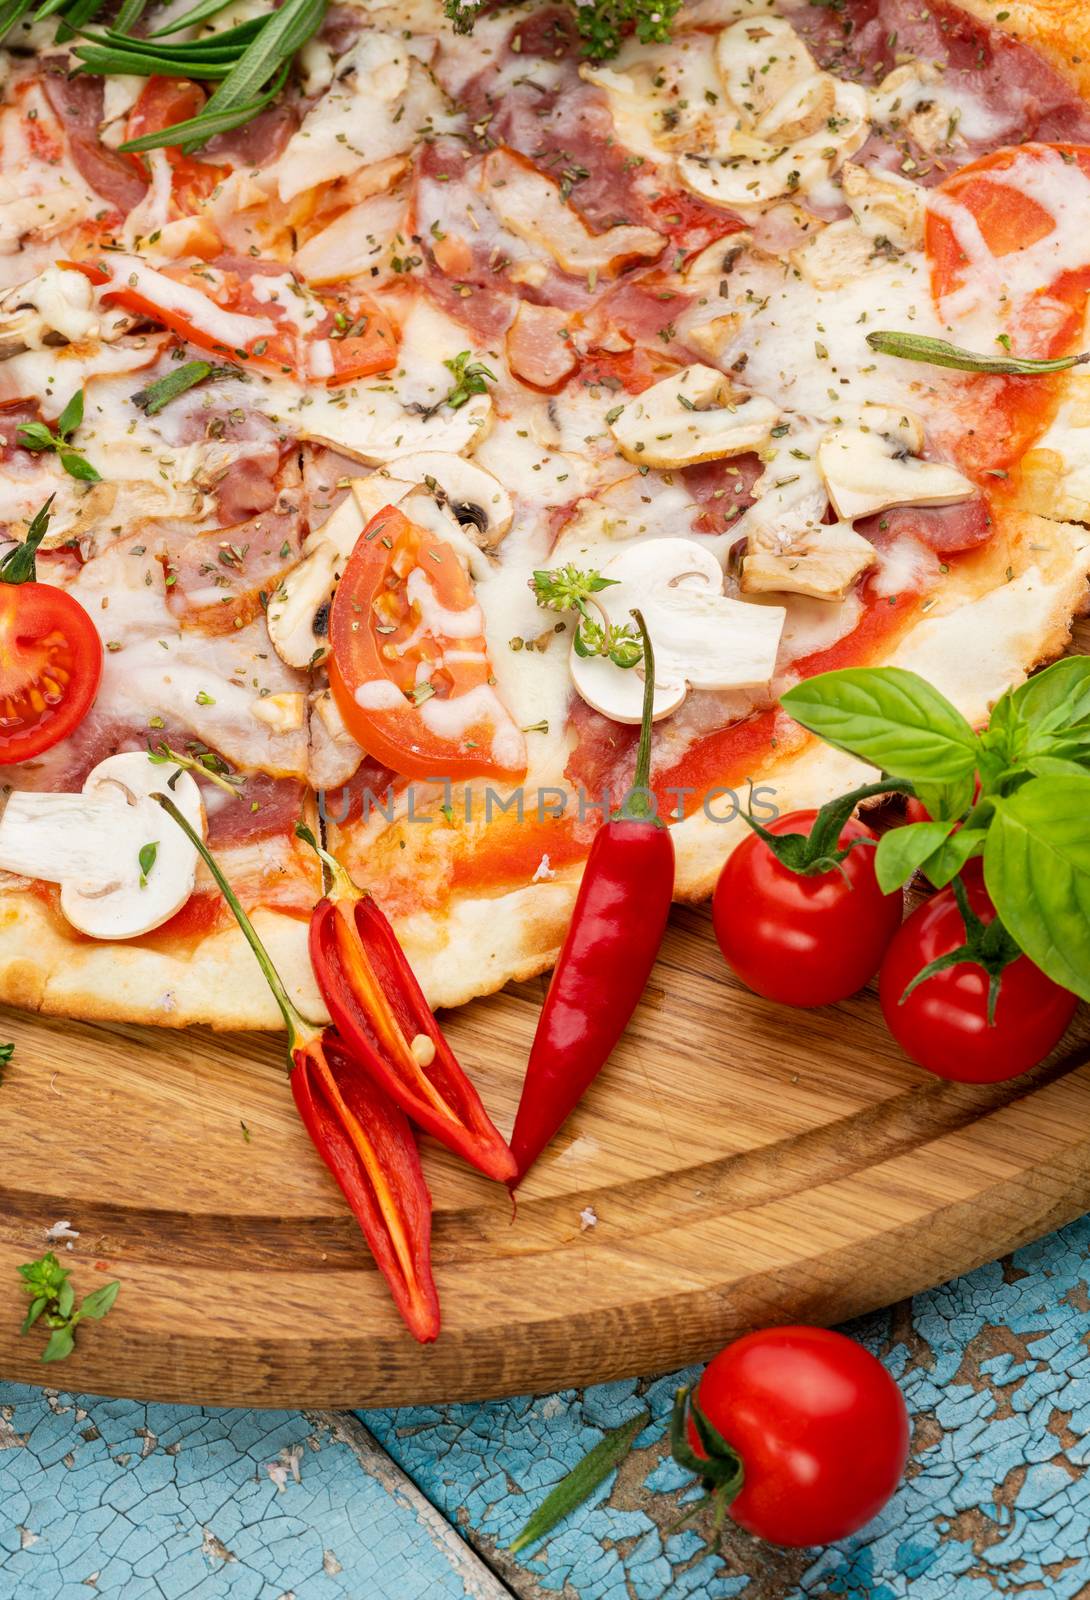 Delicious homemade Italian pizza